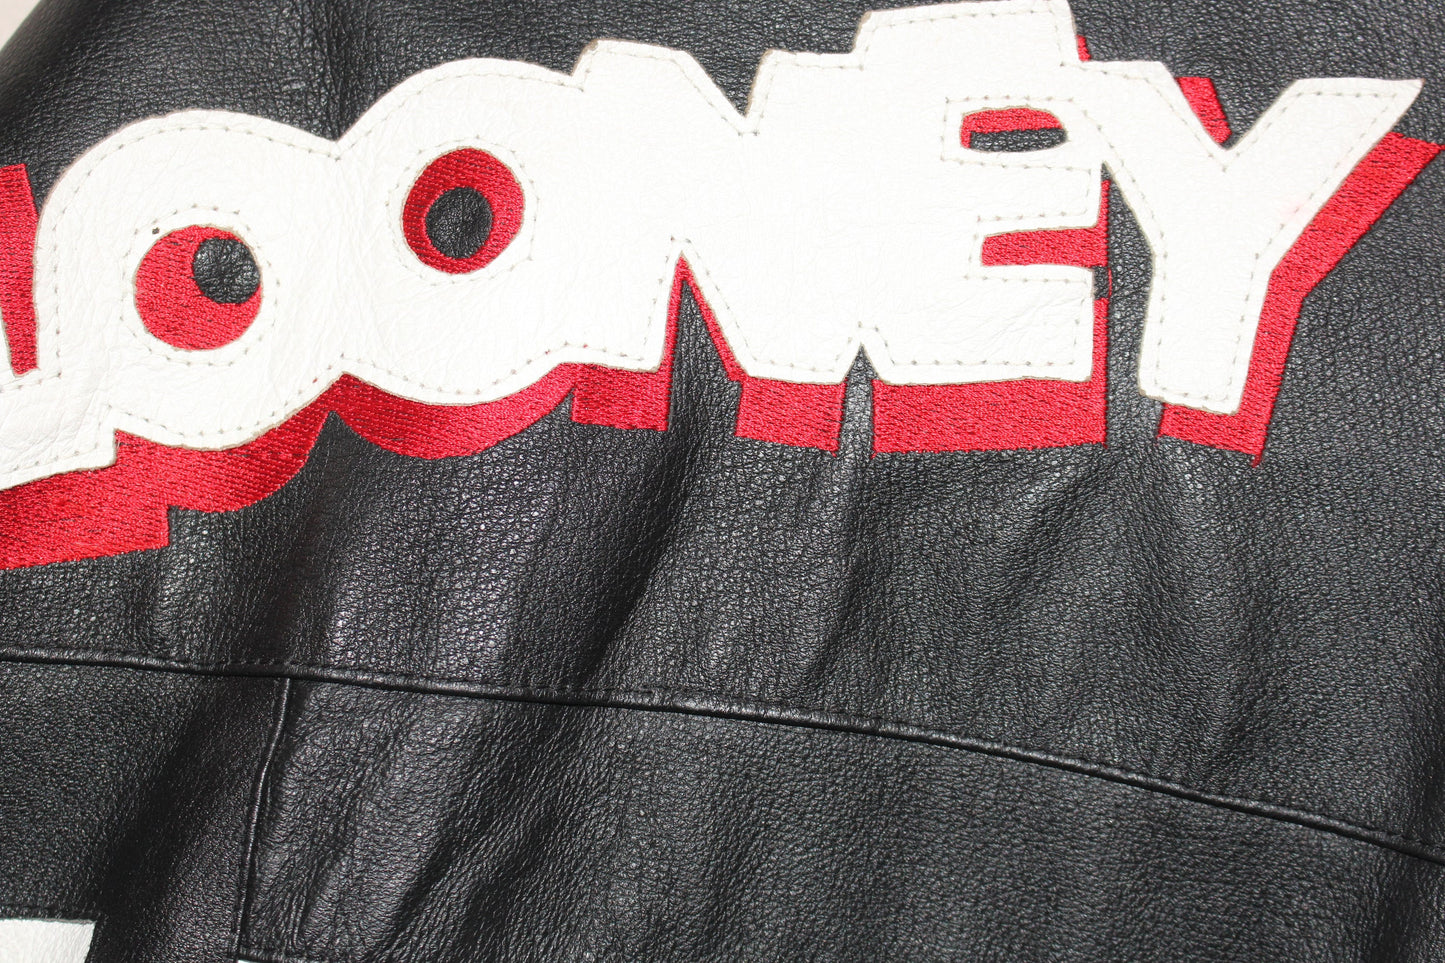 Rare Looney Tunes Leather Jacket (M)